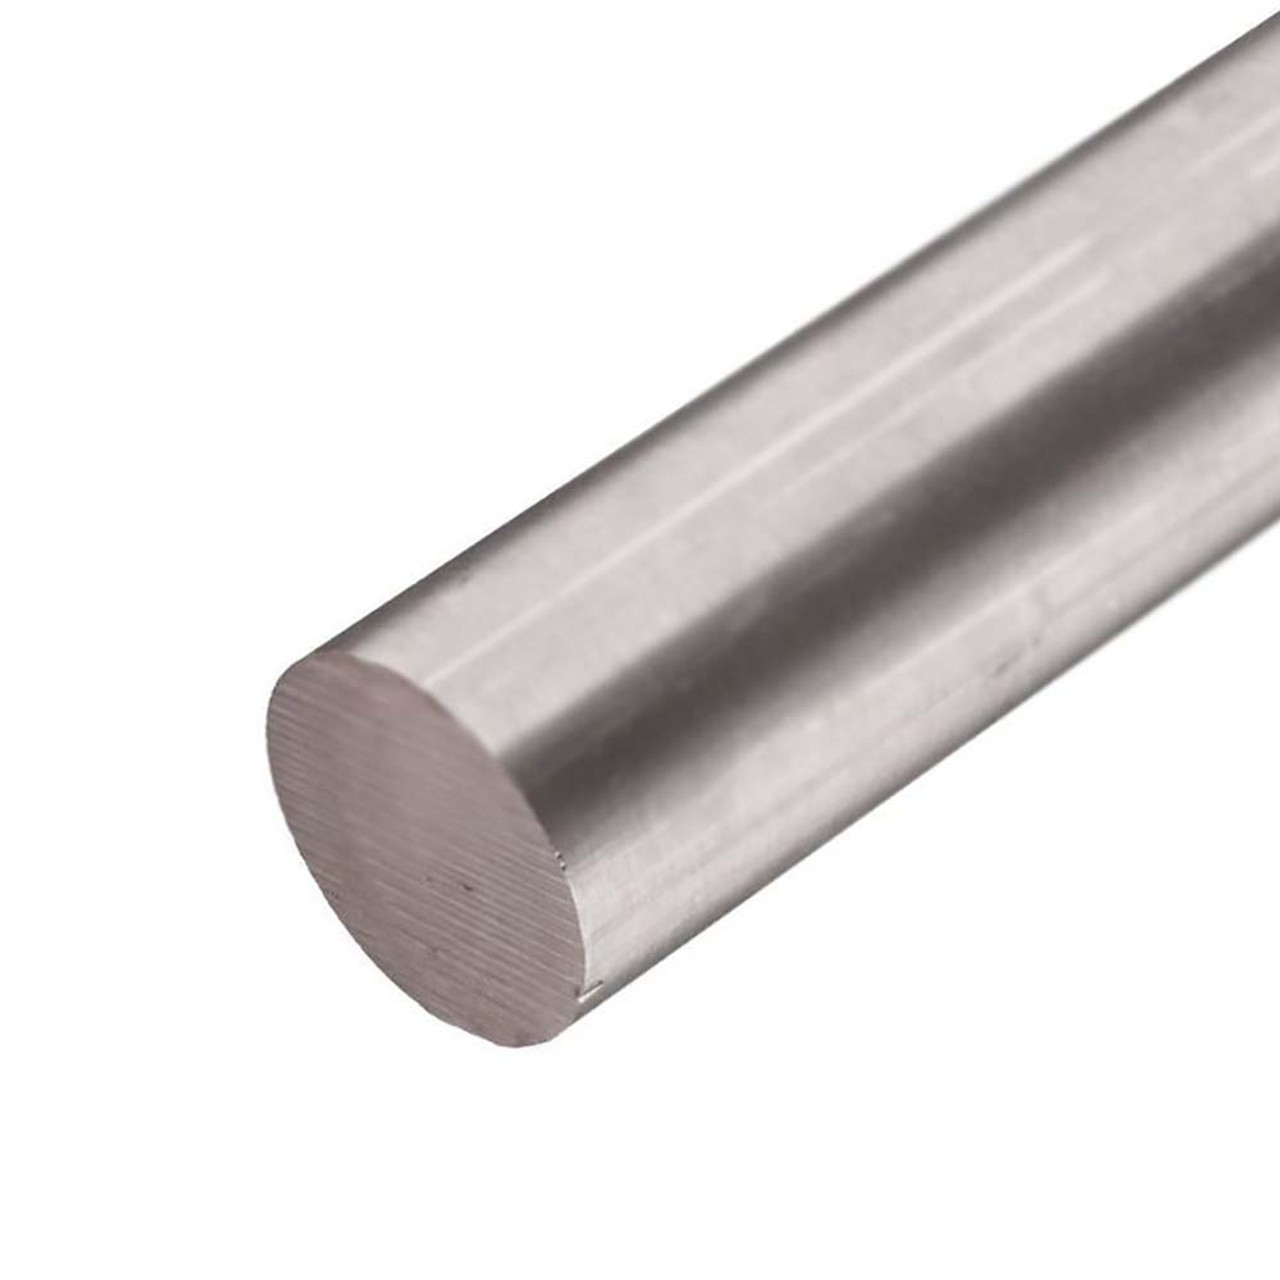 1.750 (1-3/4 inch) x 60 inches, 7075-T651 Aluminum Round Rod